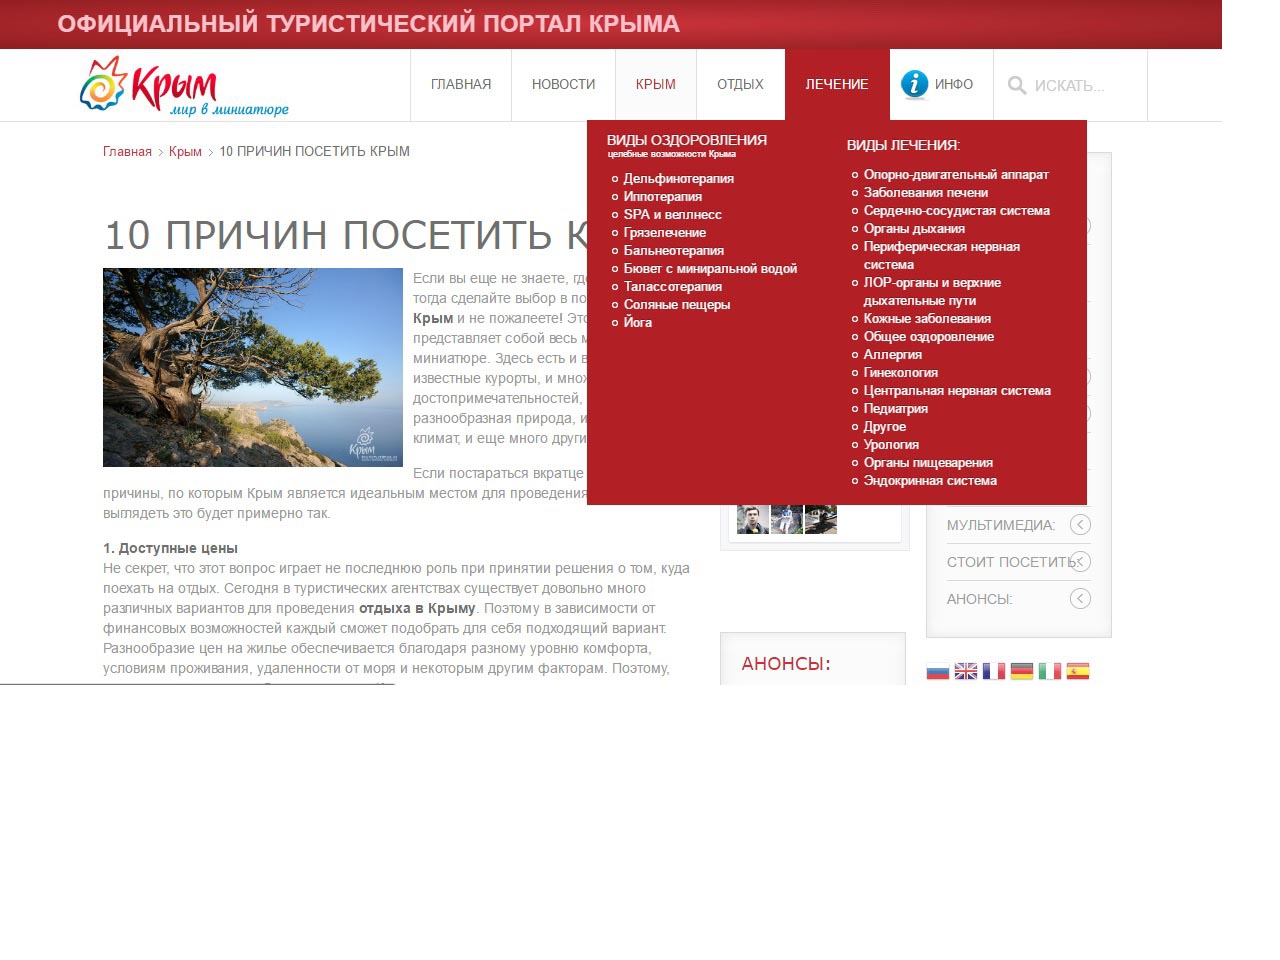 Сайт министерства курортов и туризма Крыма